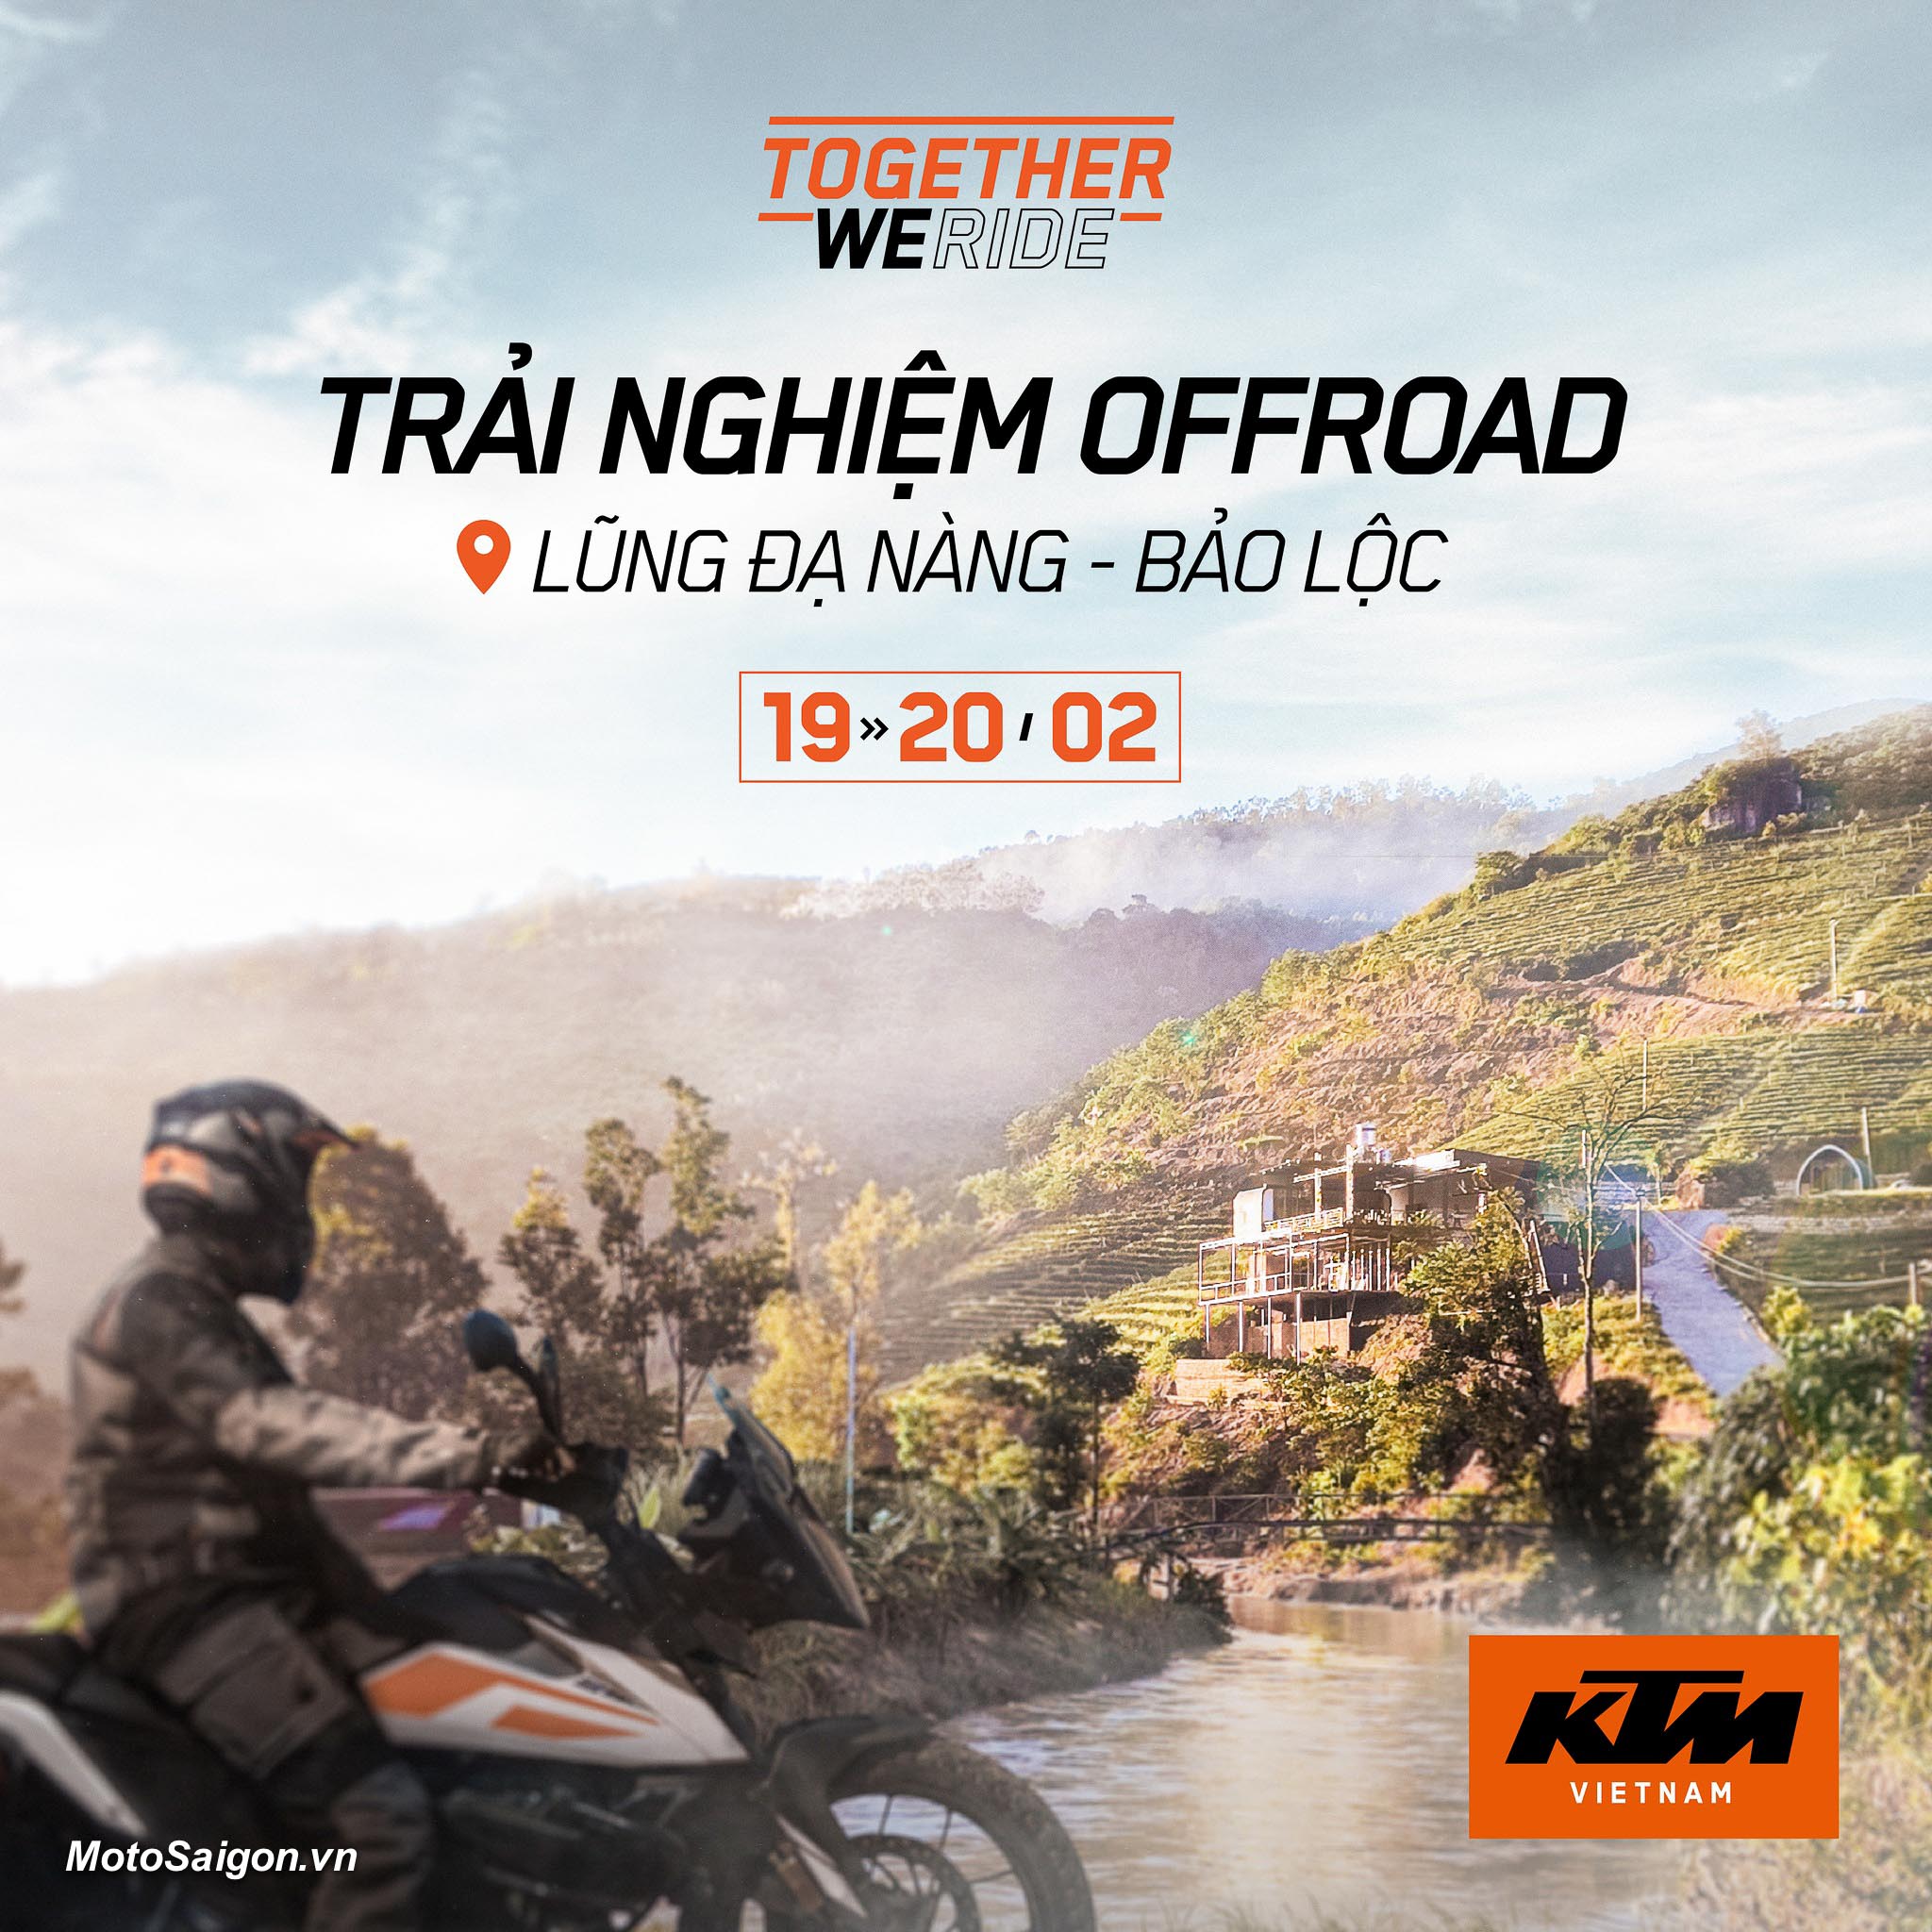 Together We Ride - Tour trải nghiệm Offroad cùng KTM & Husqvarna Việt Nam